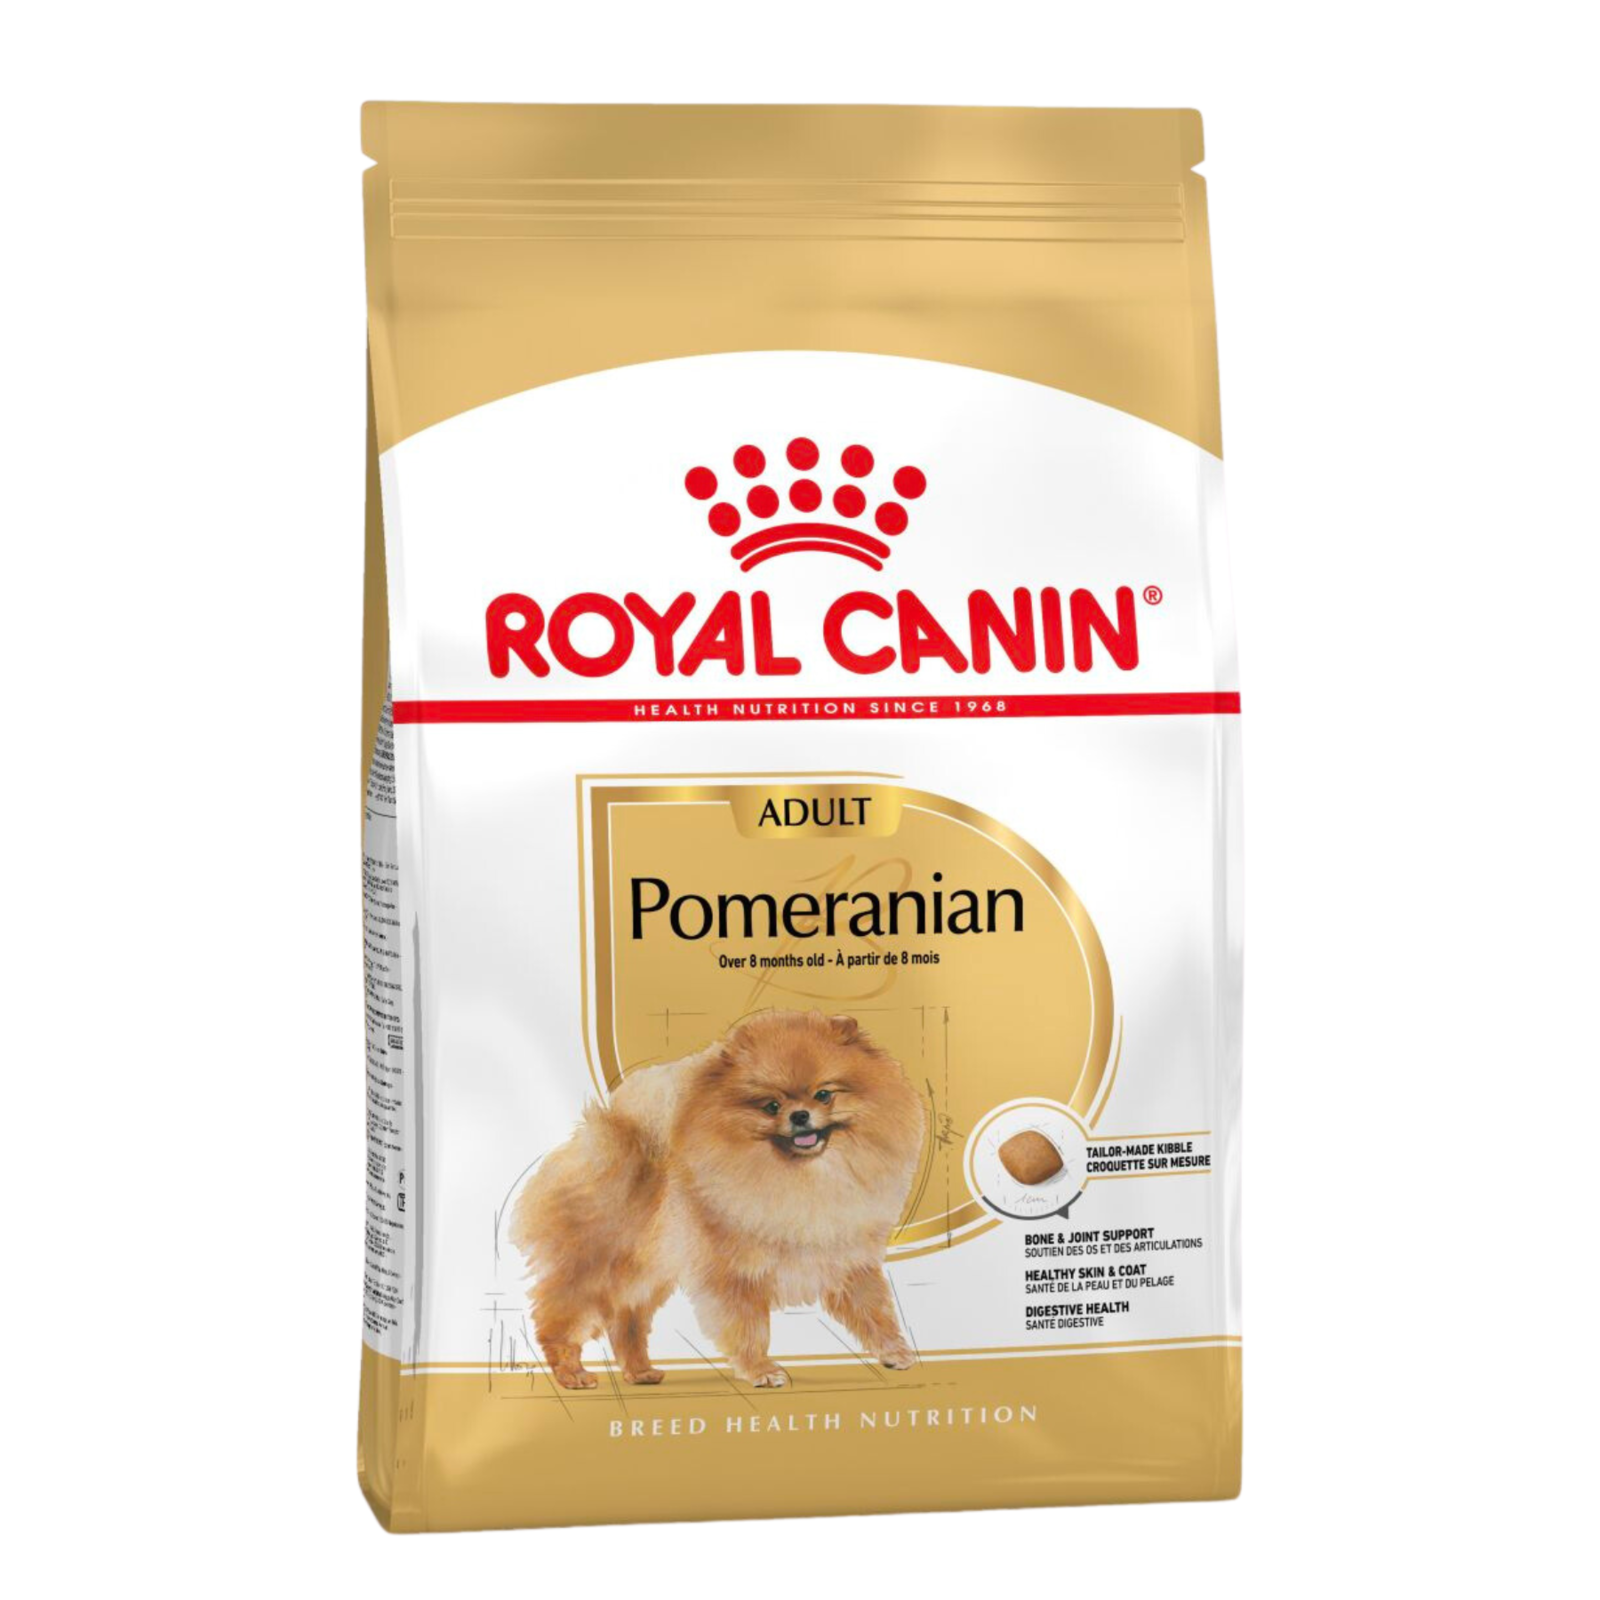 Royal Canin Dog Food Adult Pomeranian 1.5kg